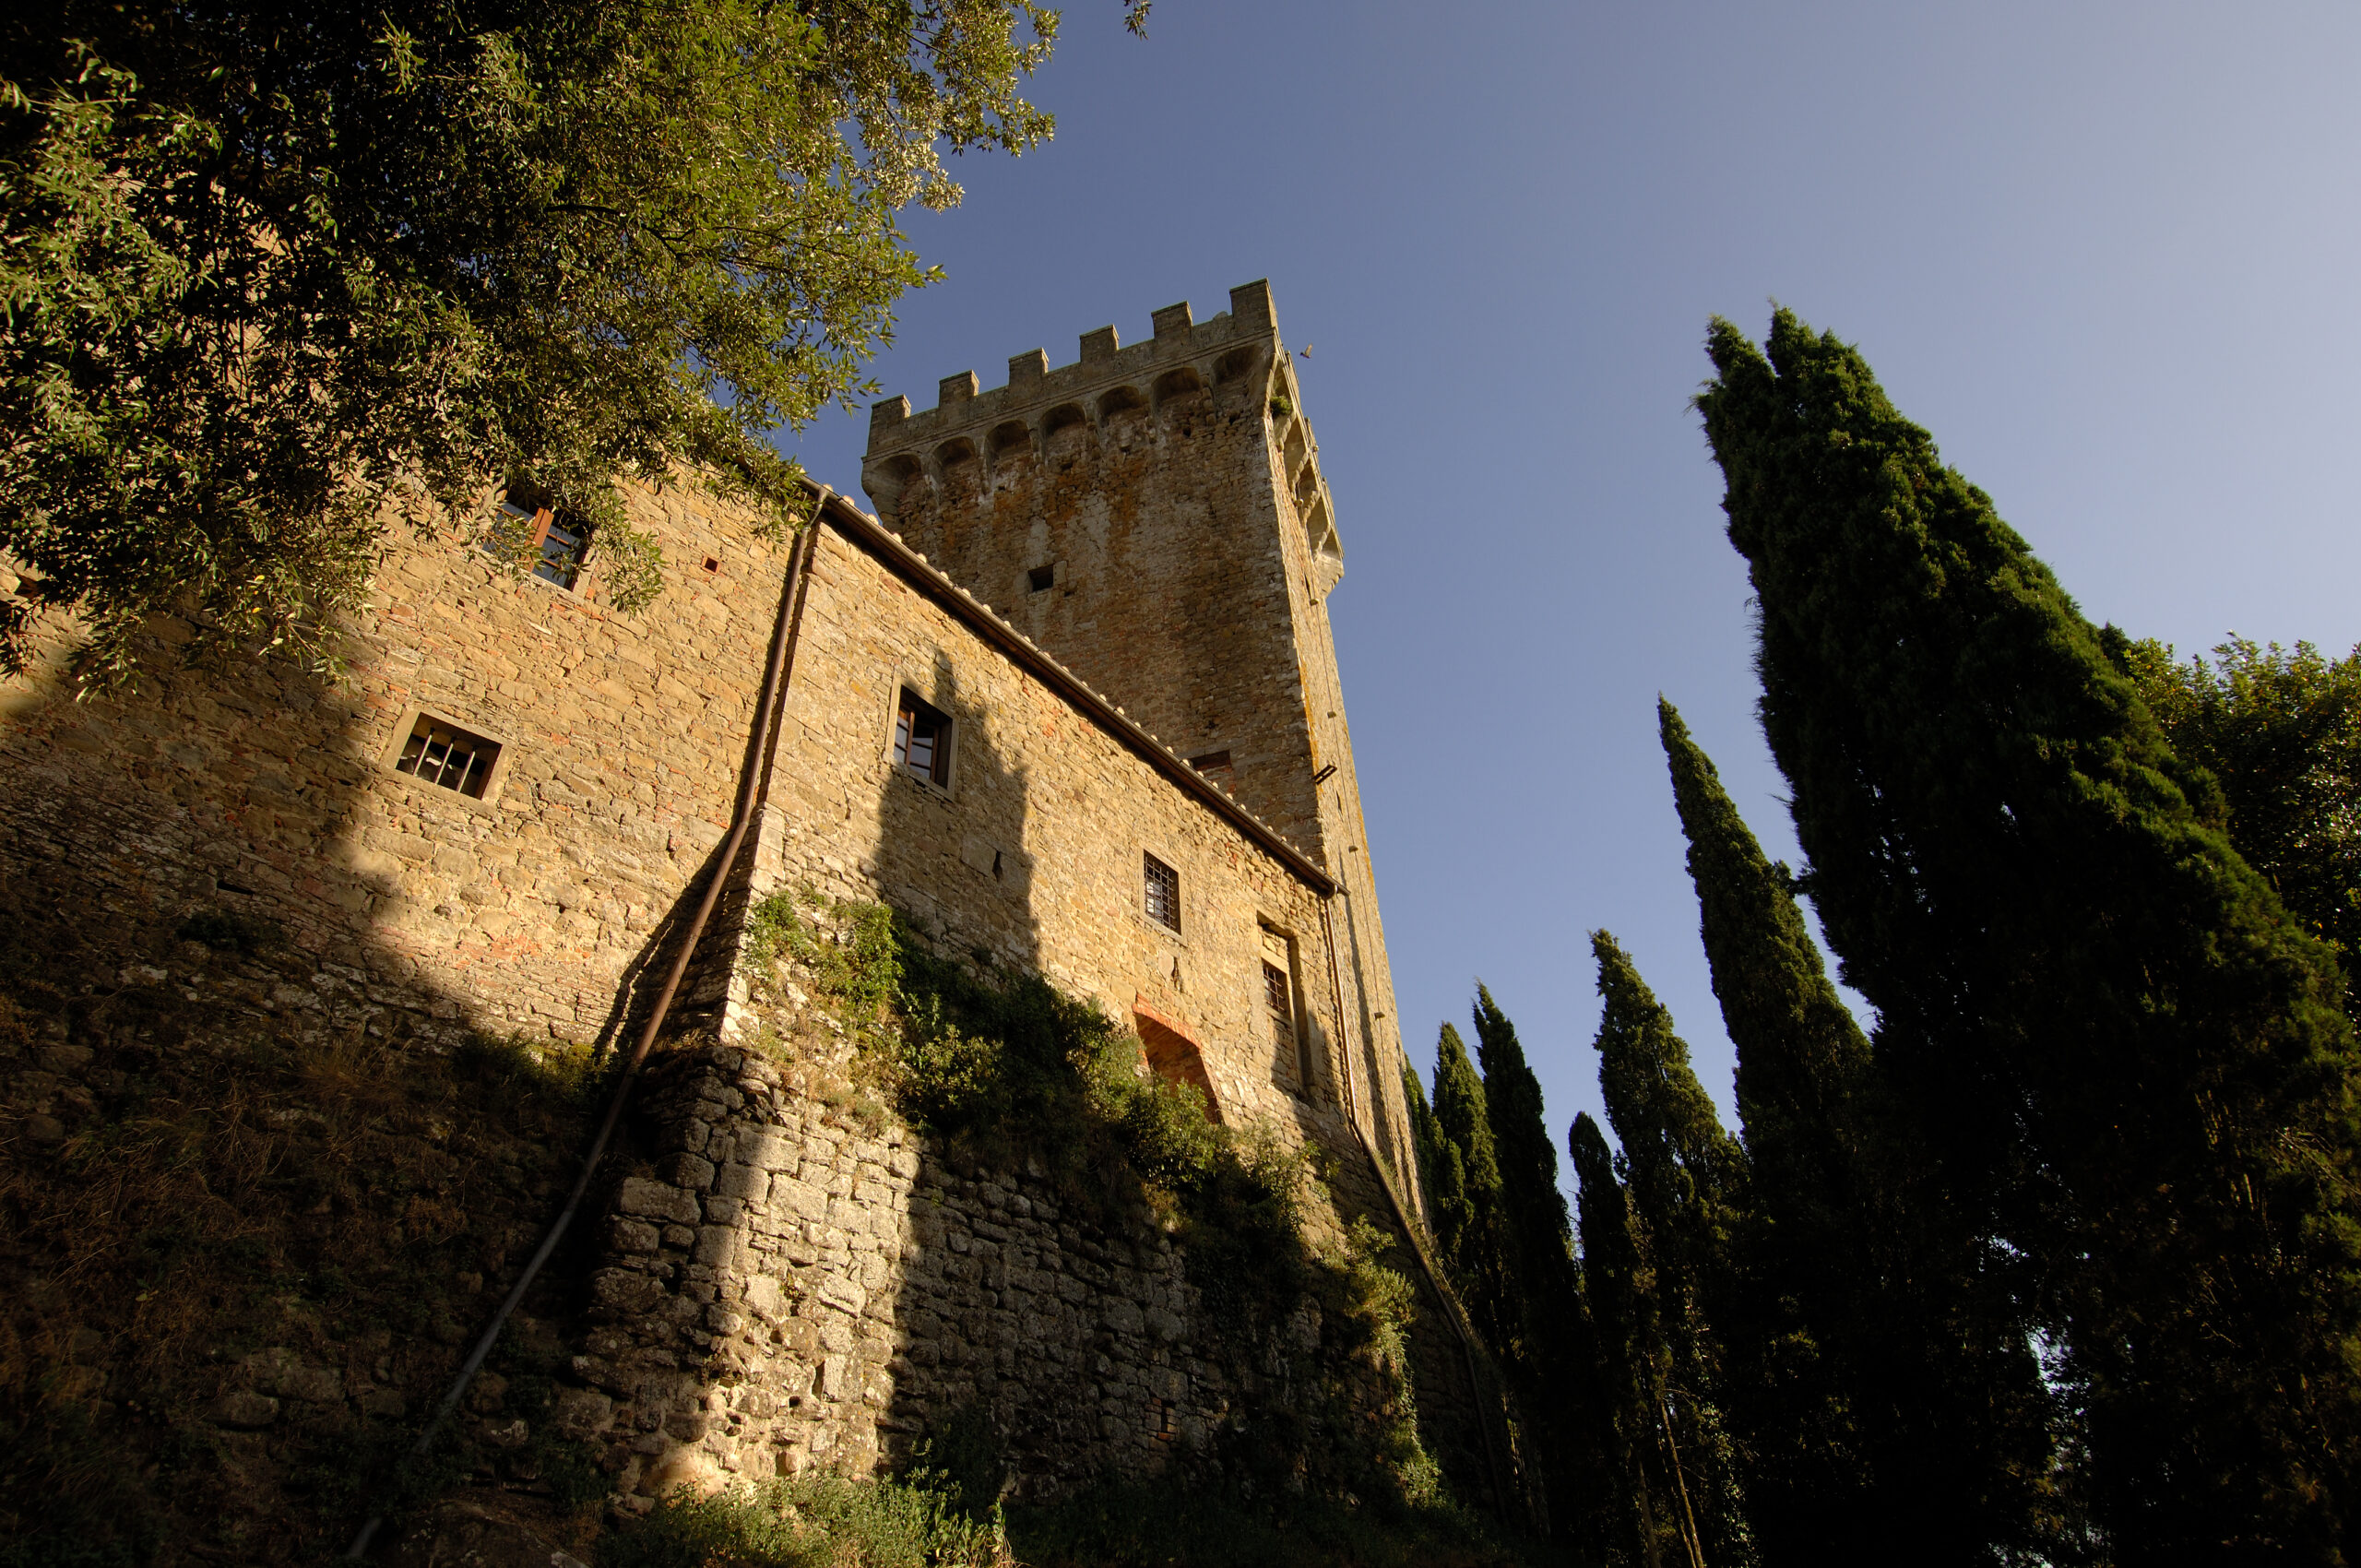 The castles of Valdichiana Aretina